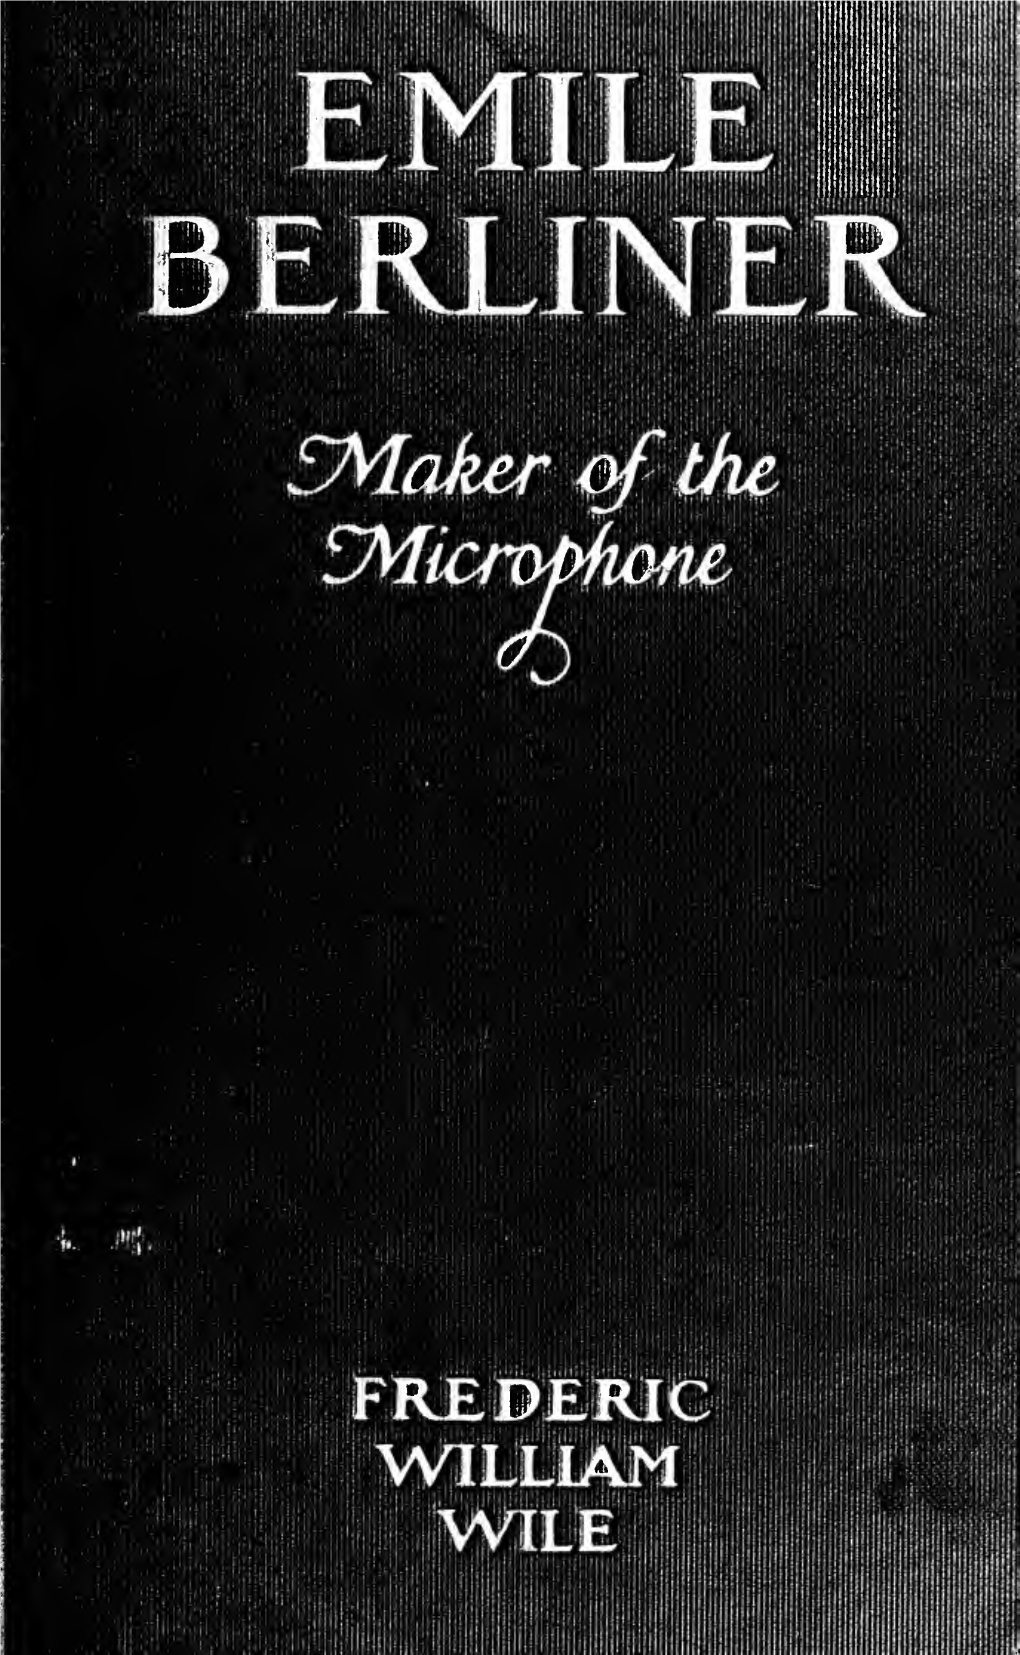 Emile Berliner, Maker of the Microphone